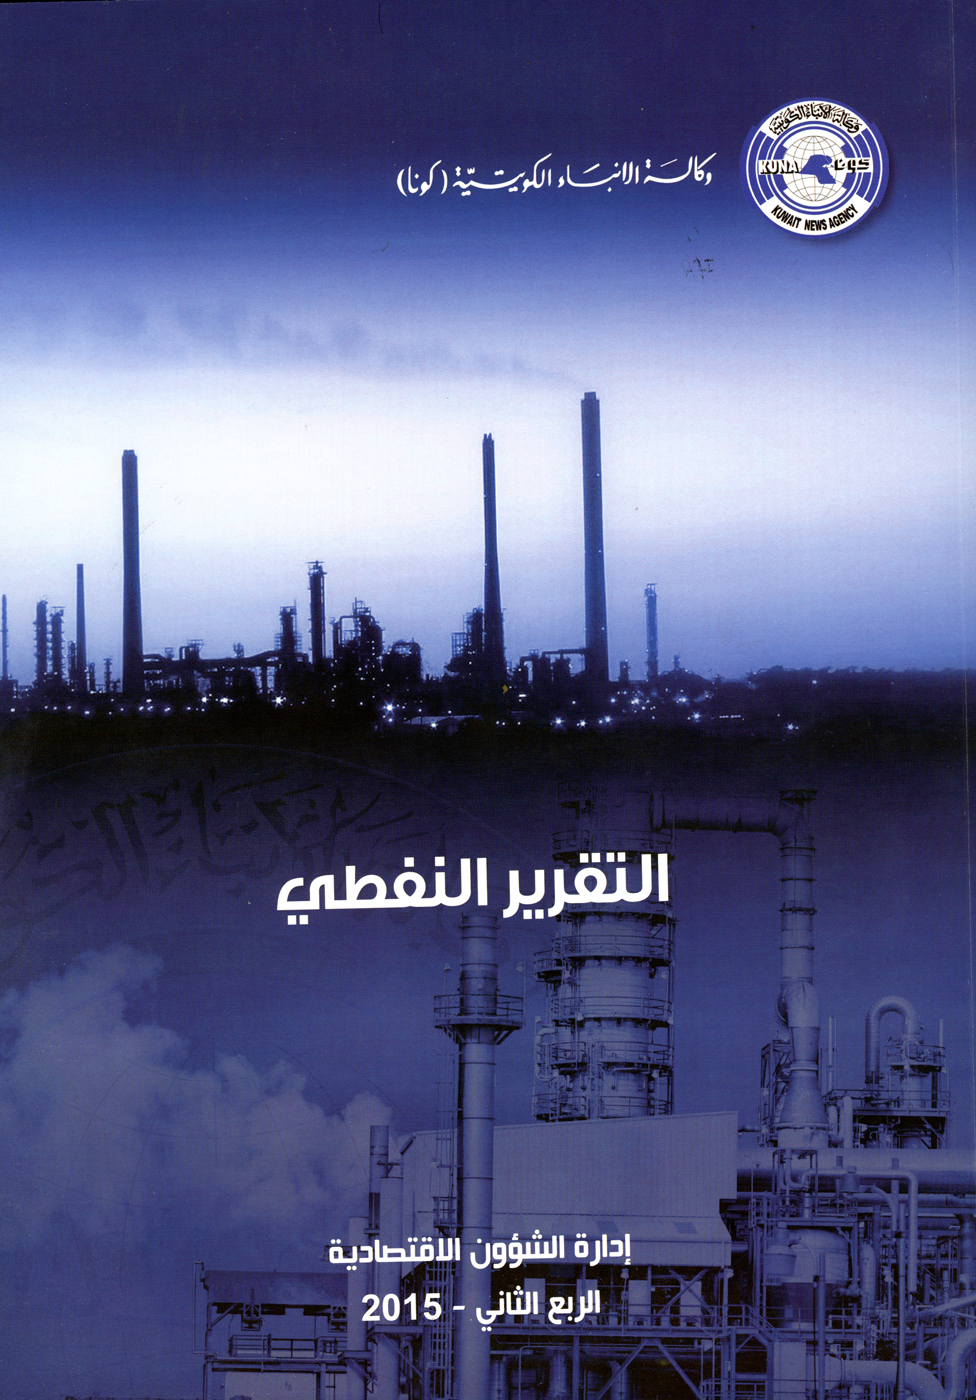 KUNA releases 19th petroleum report